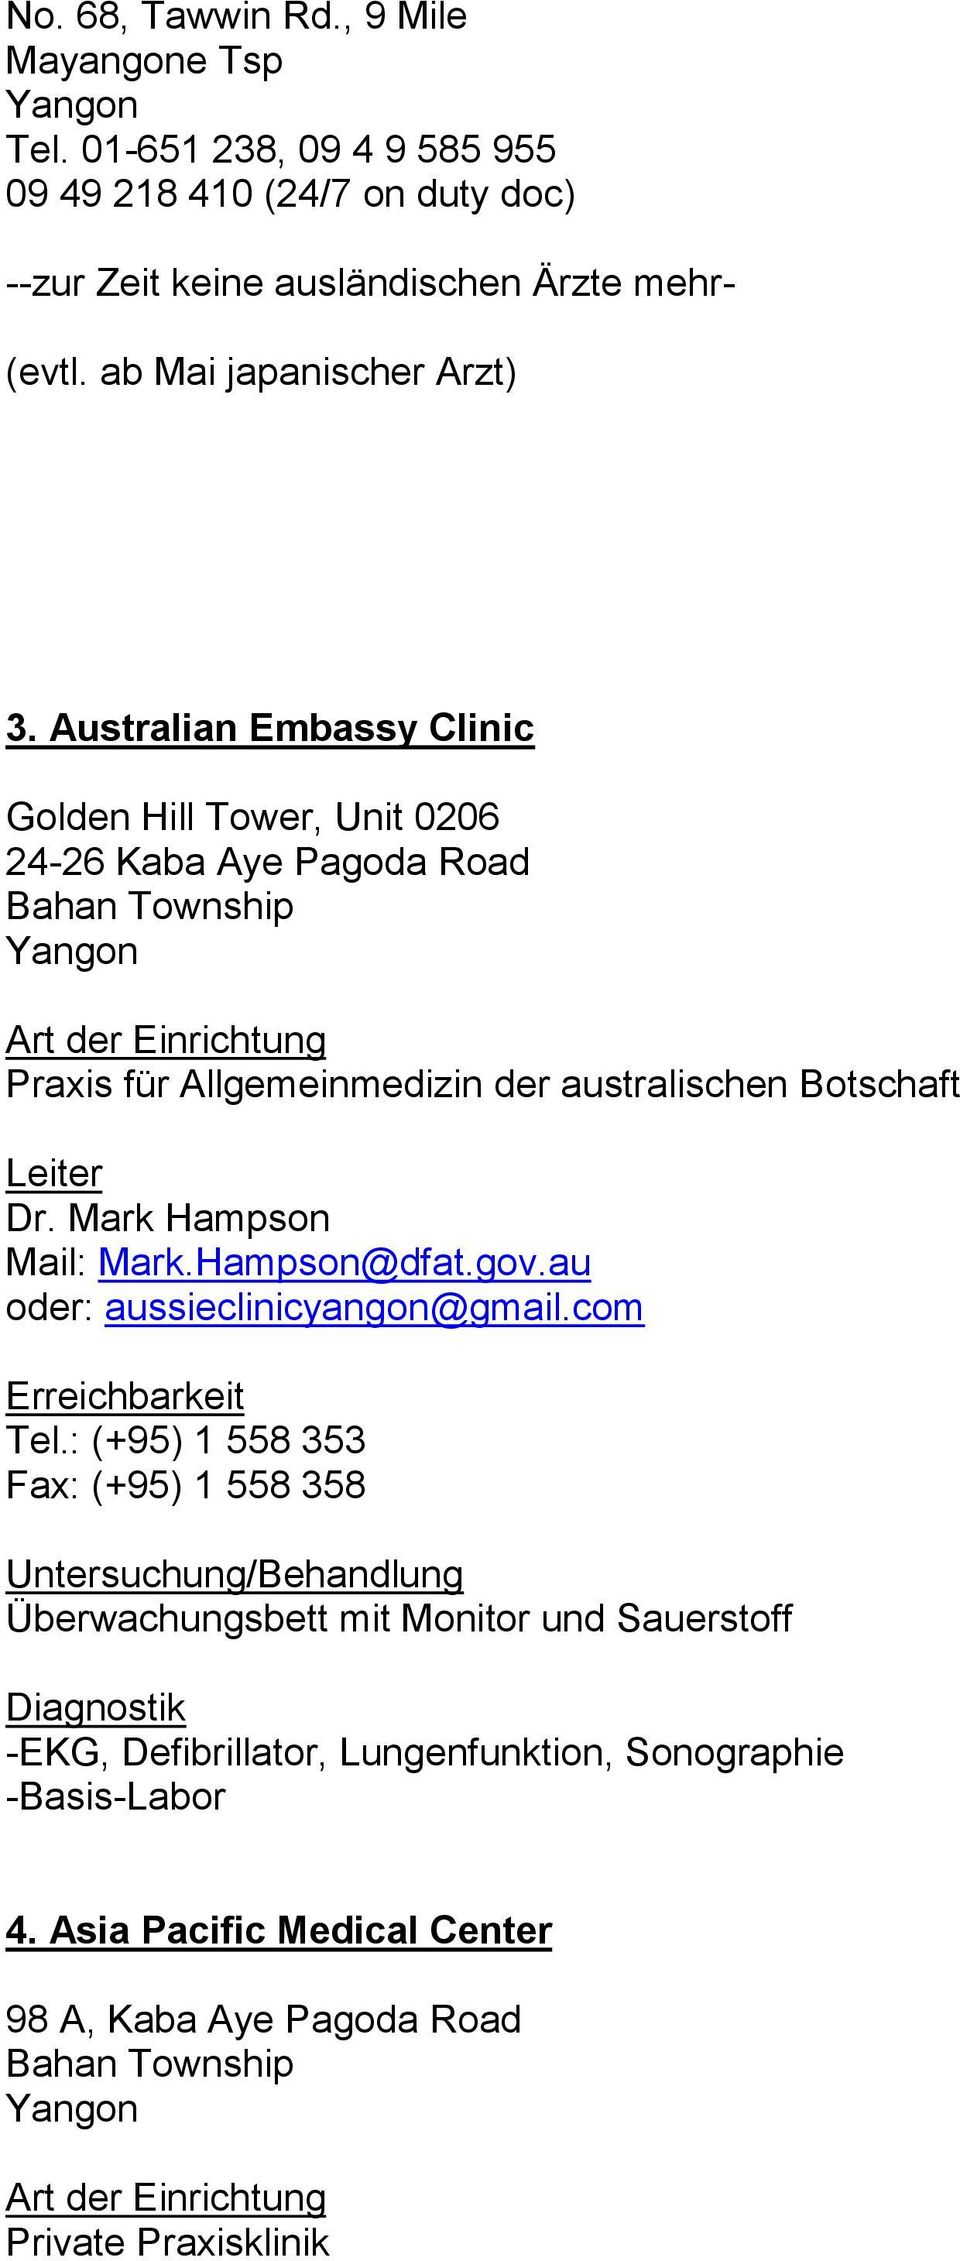 Australian Embassy Clinic Golden Hill Tower, Unit 0206 24-26 Kaba Aye Pagoda Road Bahan Township Praxis für Allgemeinmedizin der australischen Botschaft Leiter Dr.